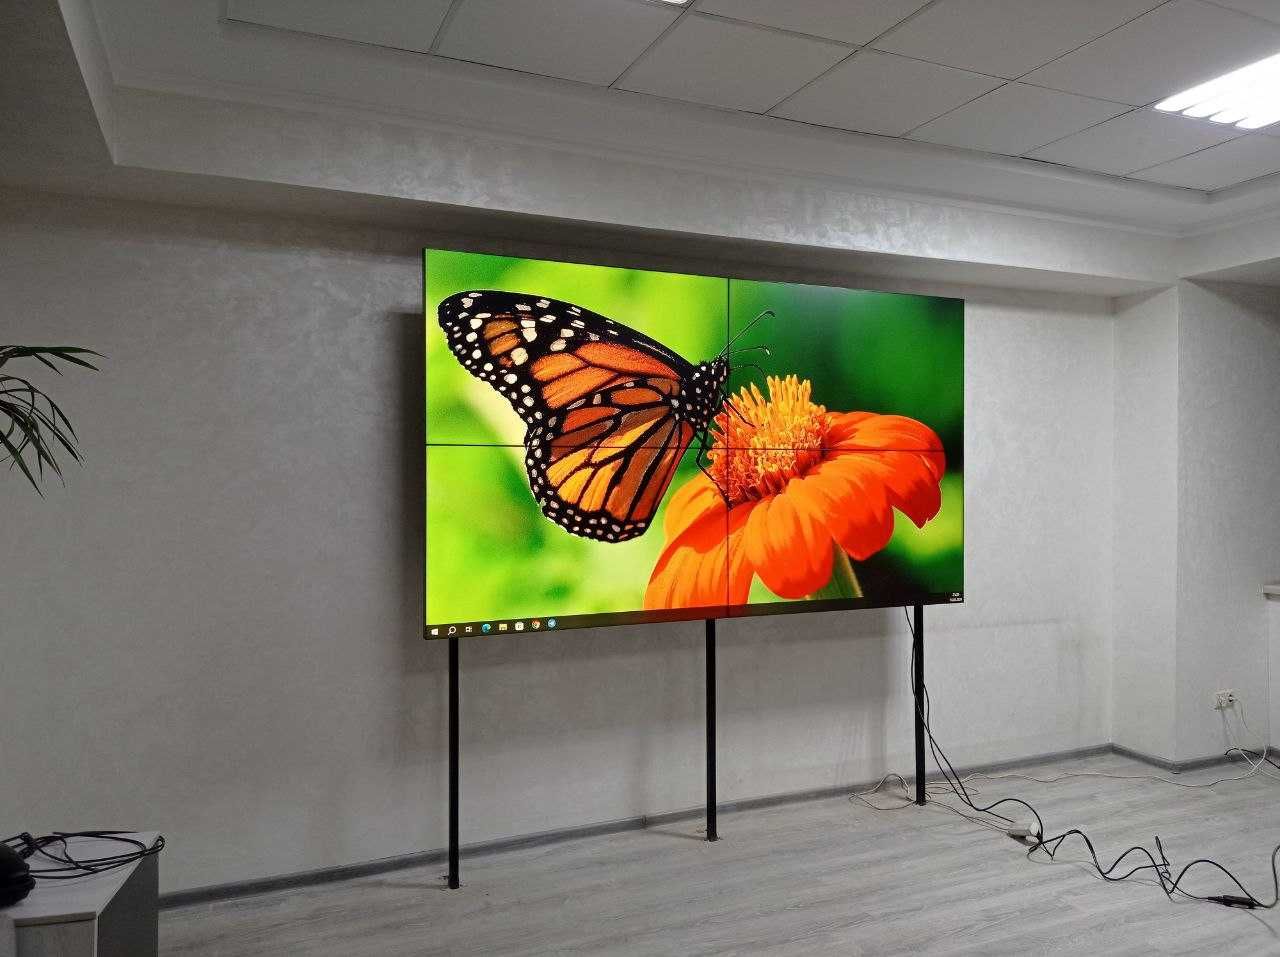 Видеостена LCD 55" 4K ВКС(видео конференция связь под ключ)